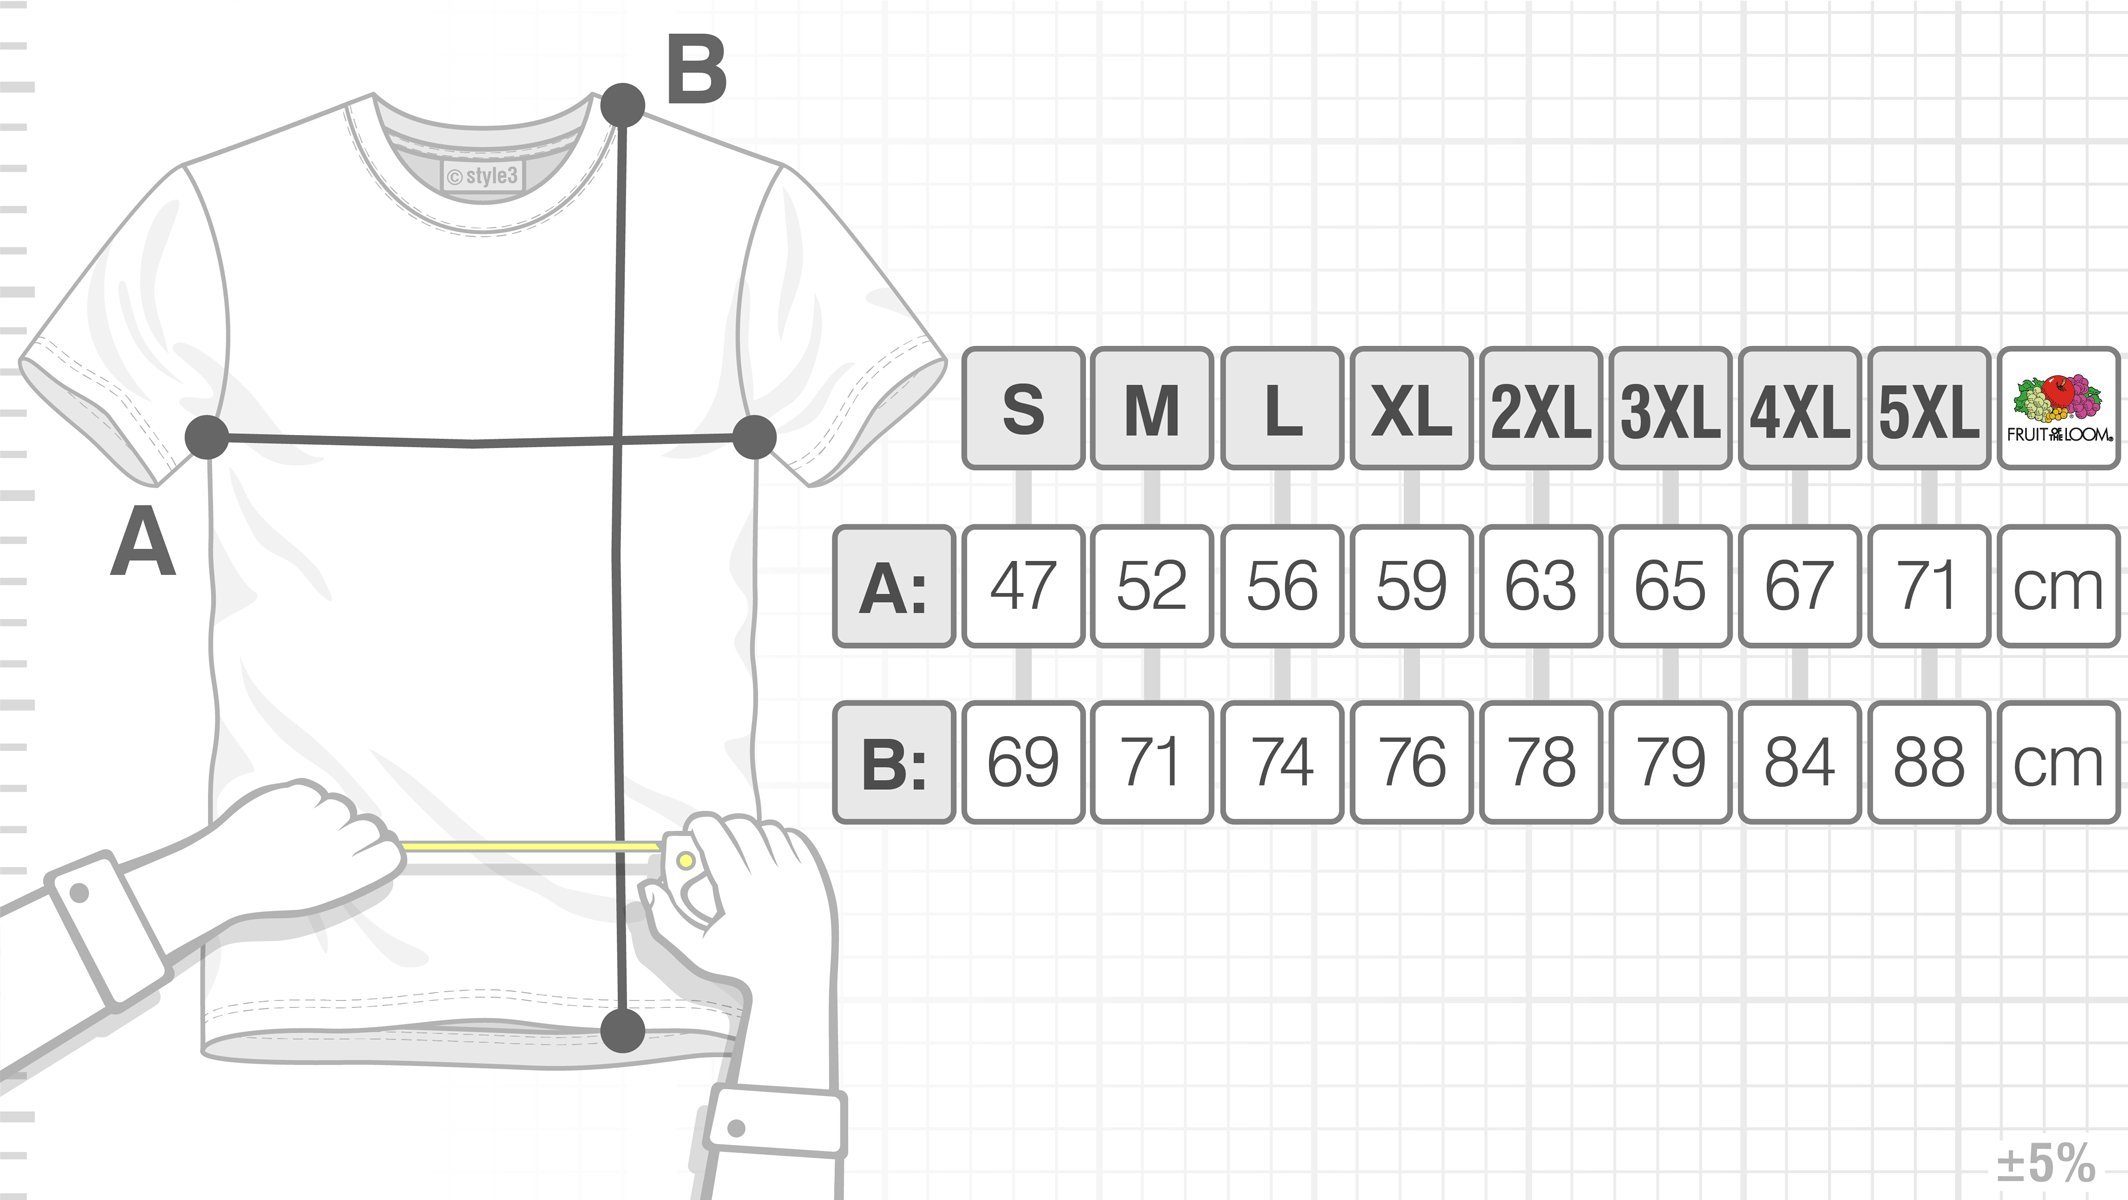 Print-Shirt Herren style3 16-Bit Videospiel T-Shirt SNES Blaupause